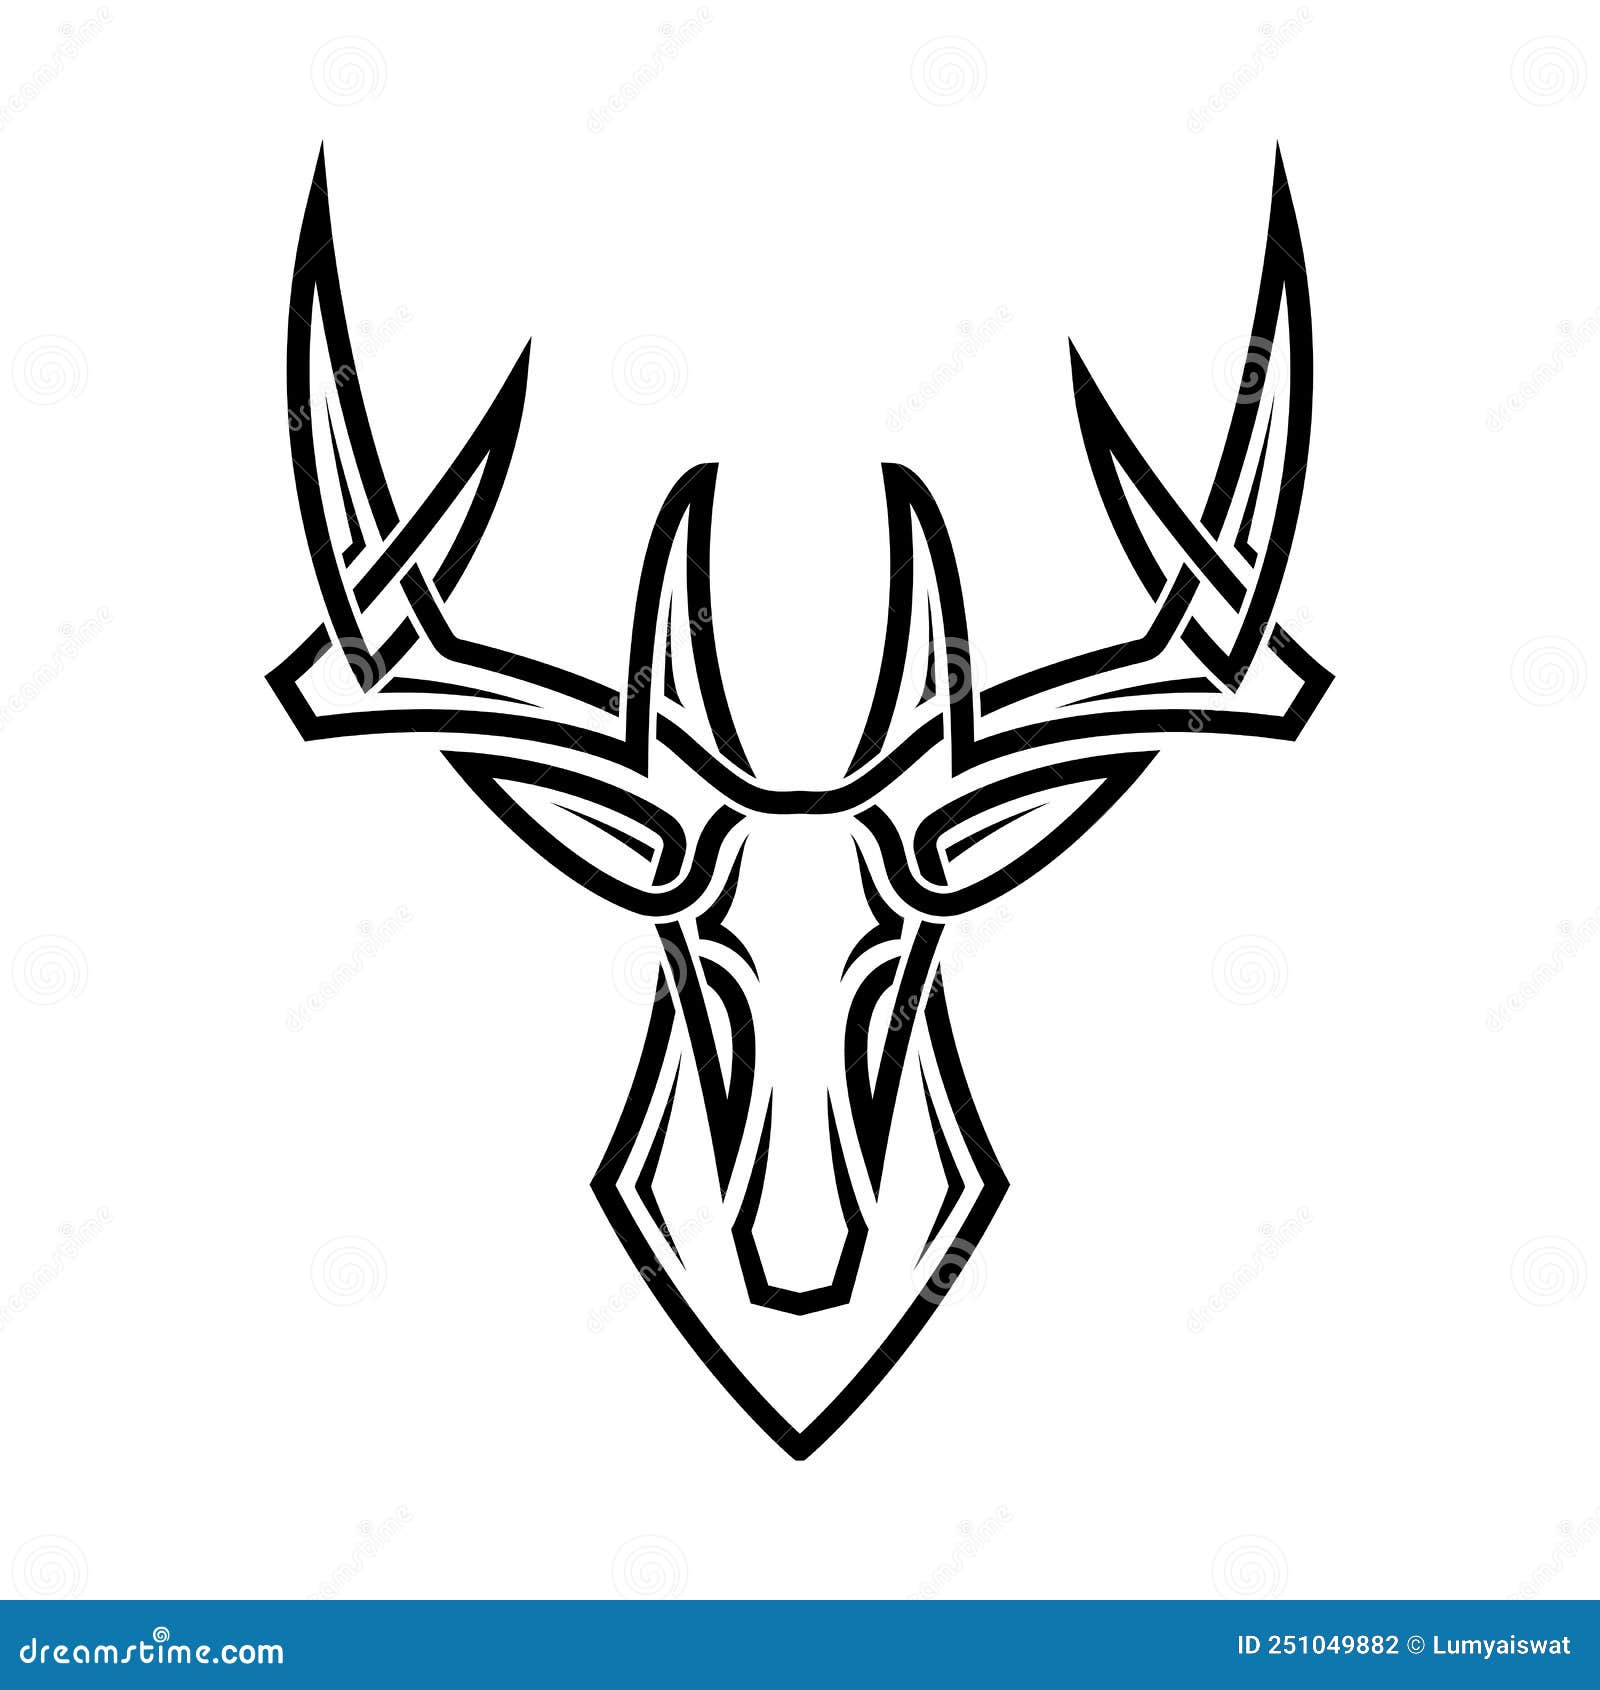 560 Silhouette Of A Deer Head Tattoo Illustrations RoyaltyFree Vector  Graphics  Clip Art  iStock